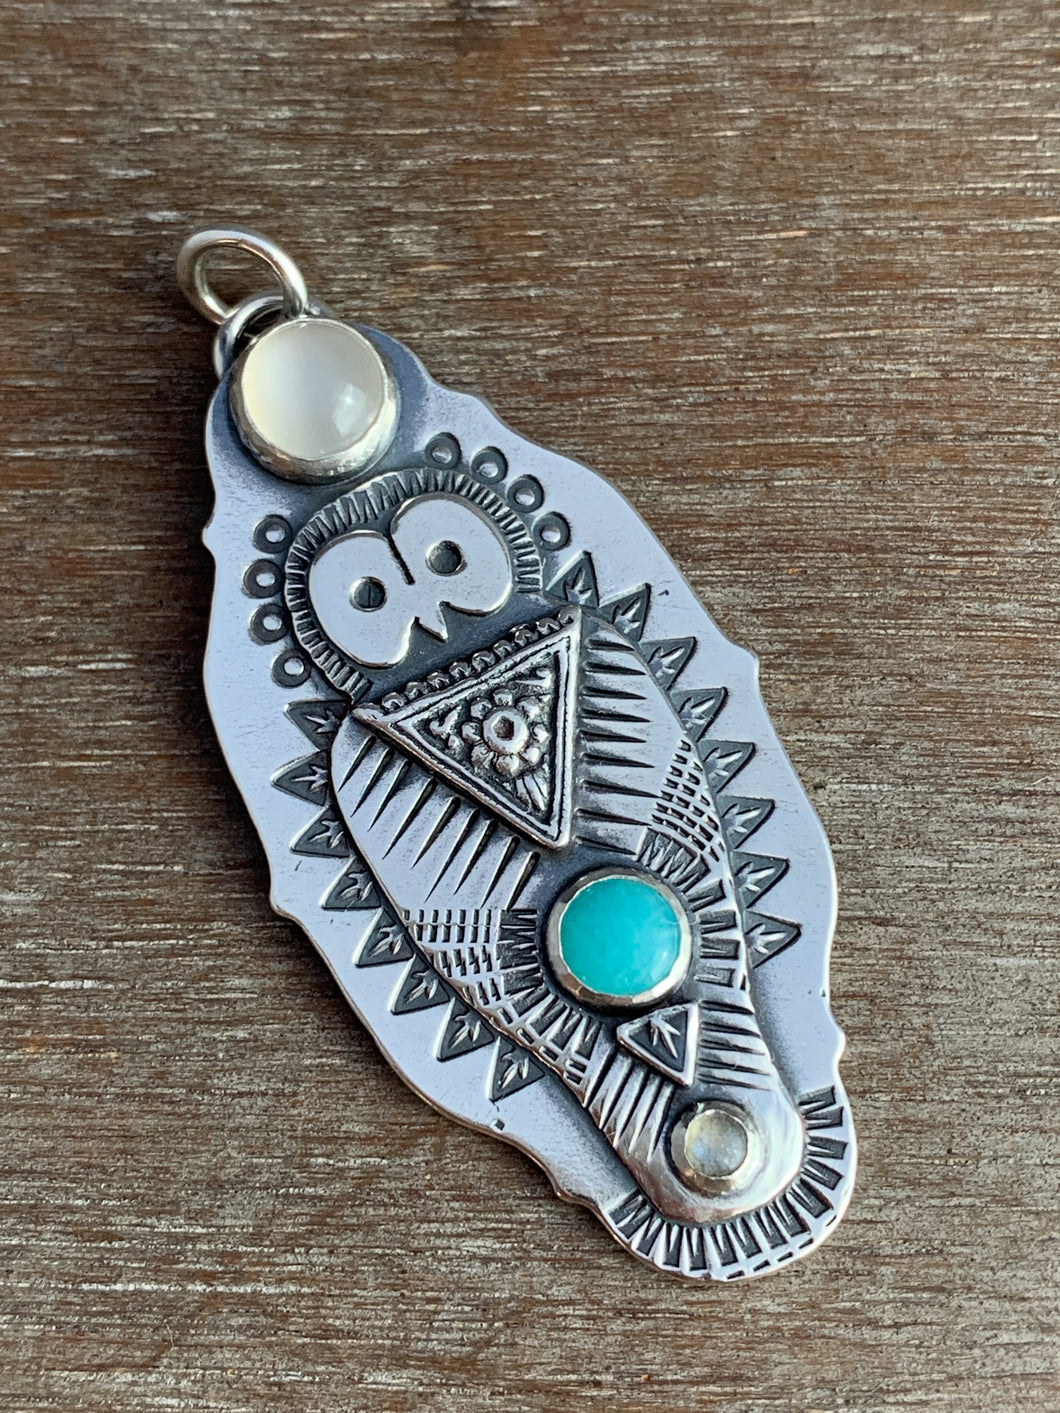 Owl pendant - moonstone, turquoise, and labradorite